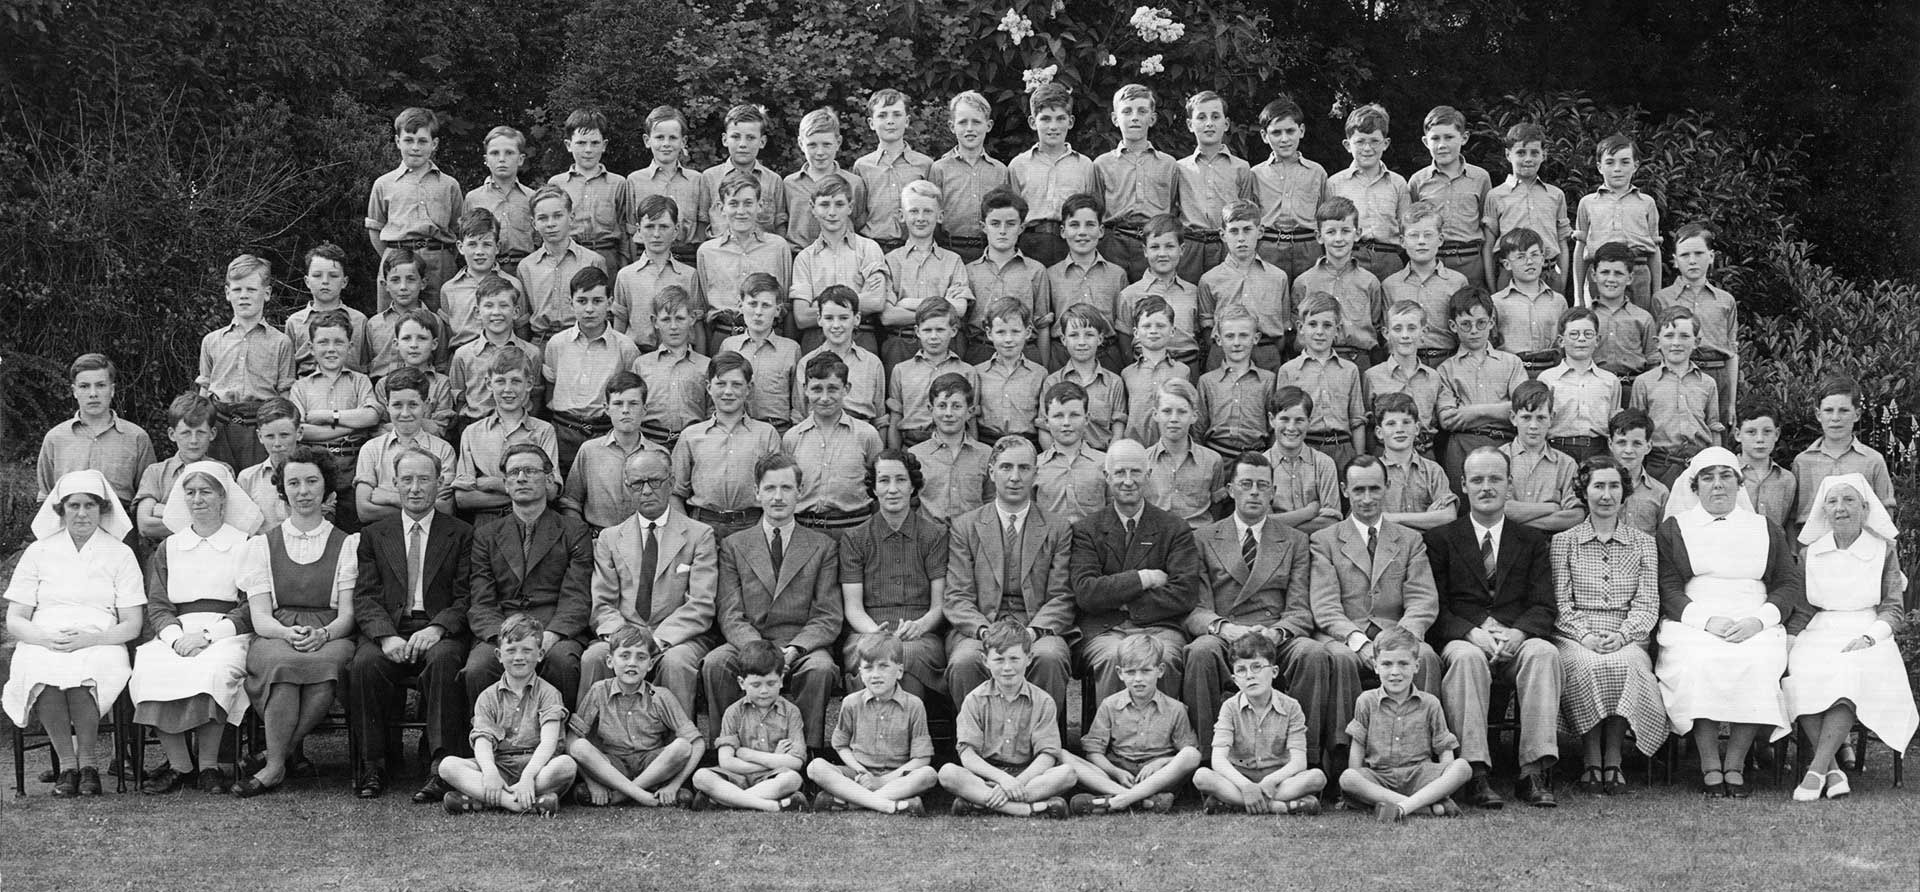 Hillstone school circa 1944